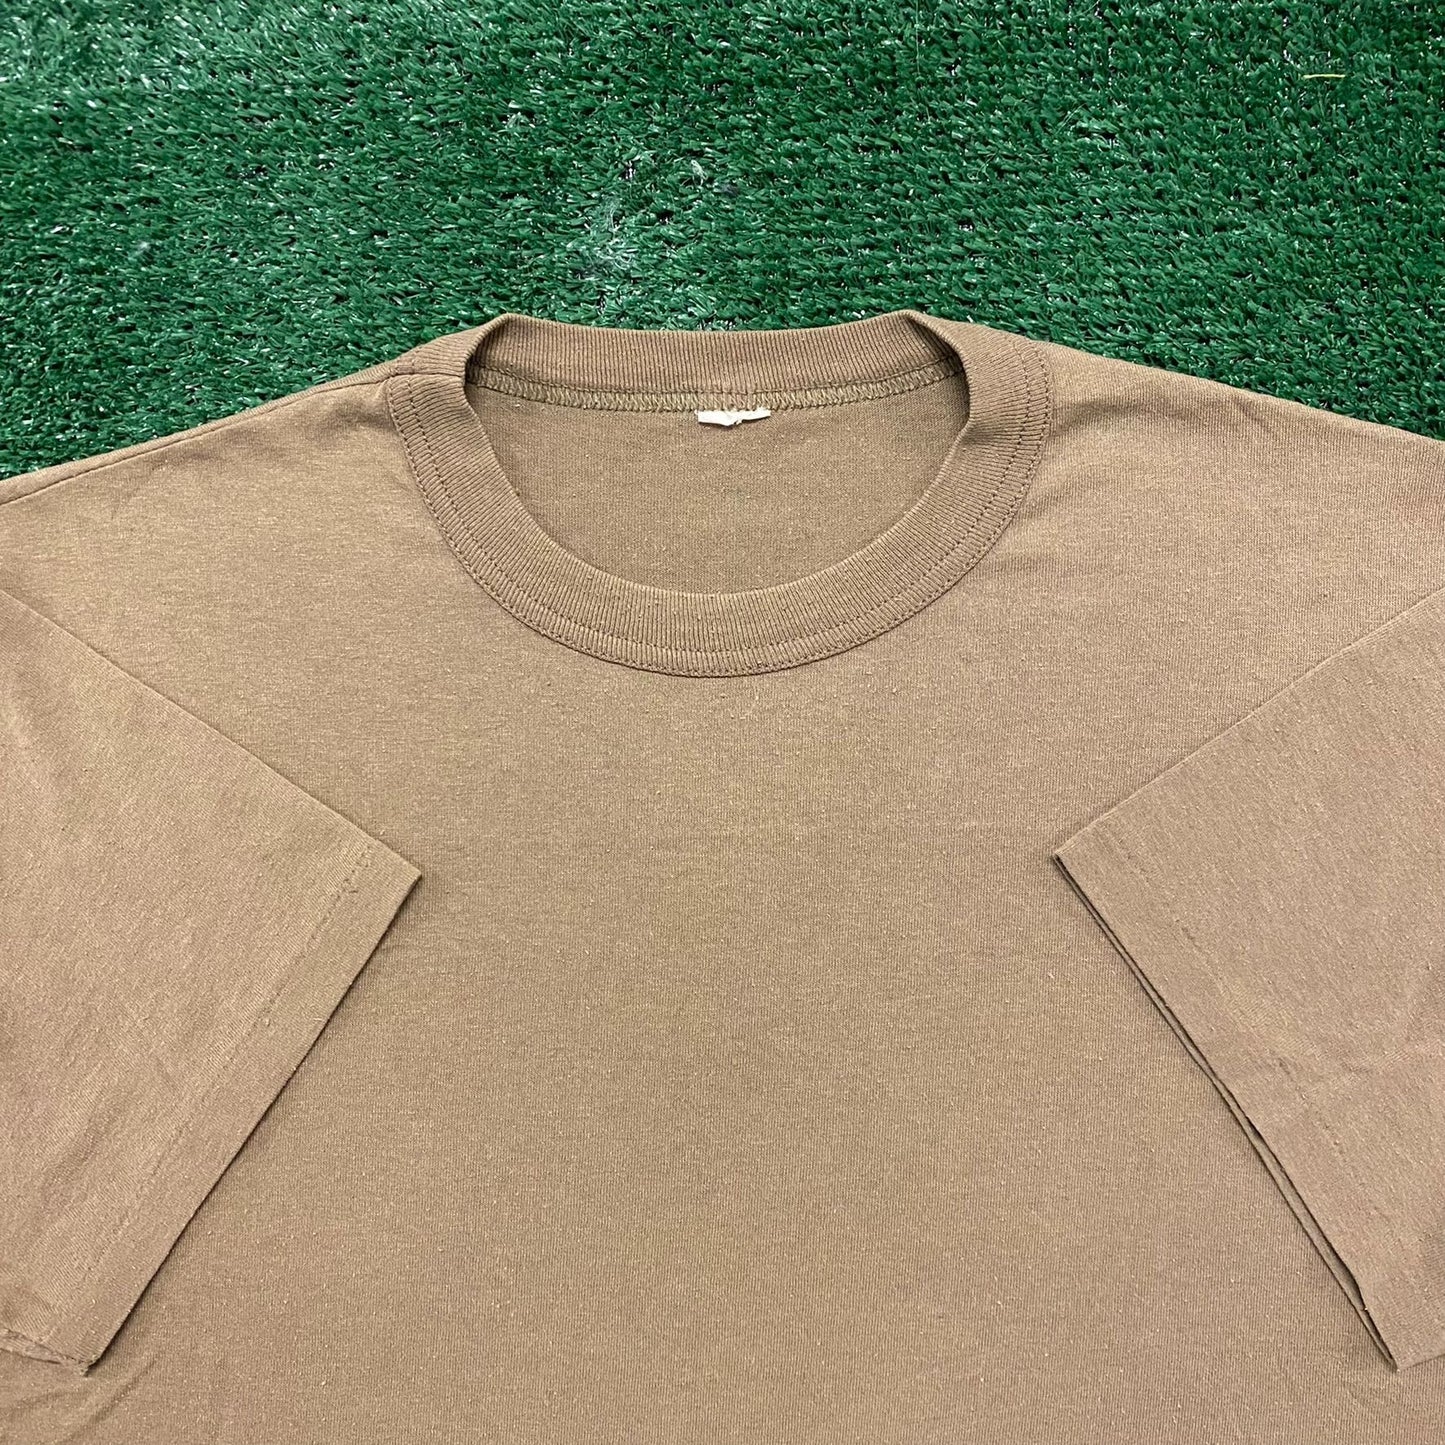 Tan Khaki Vintage 90s Blank Plain Single Stitch T-Shirt